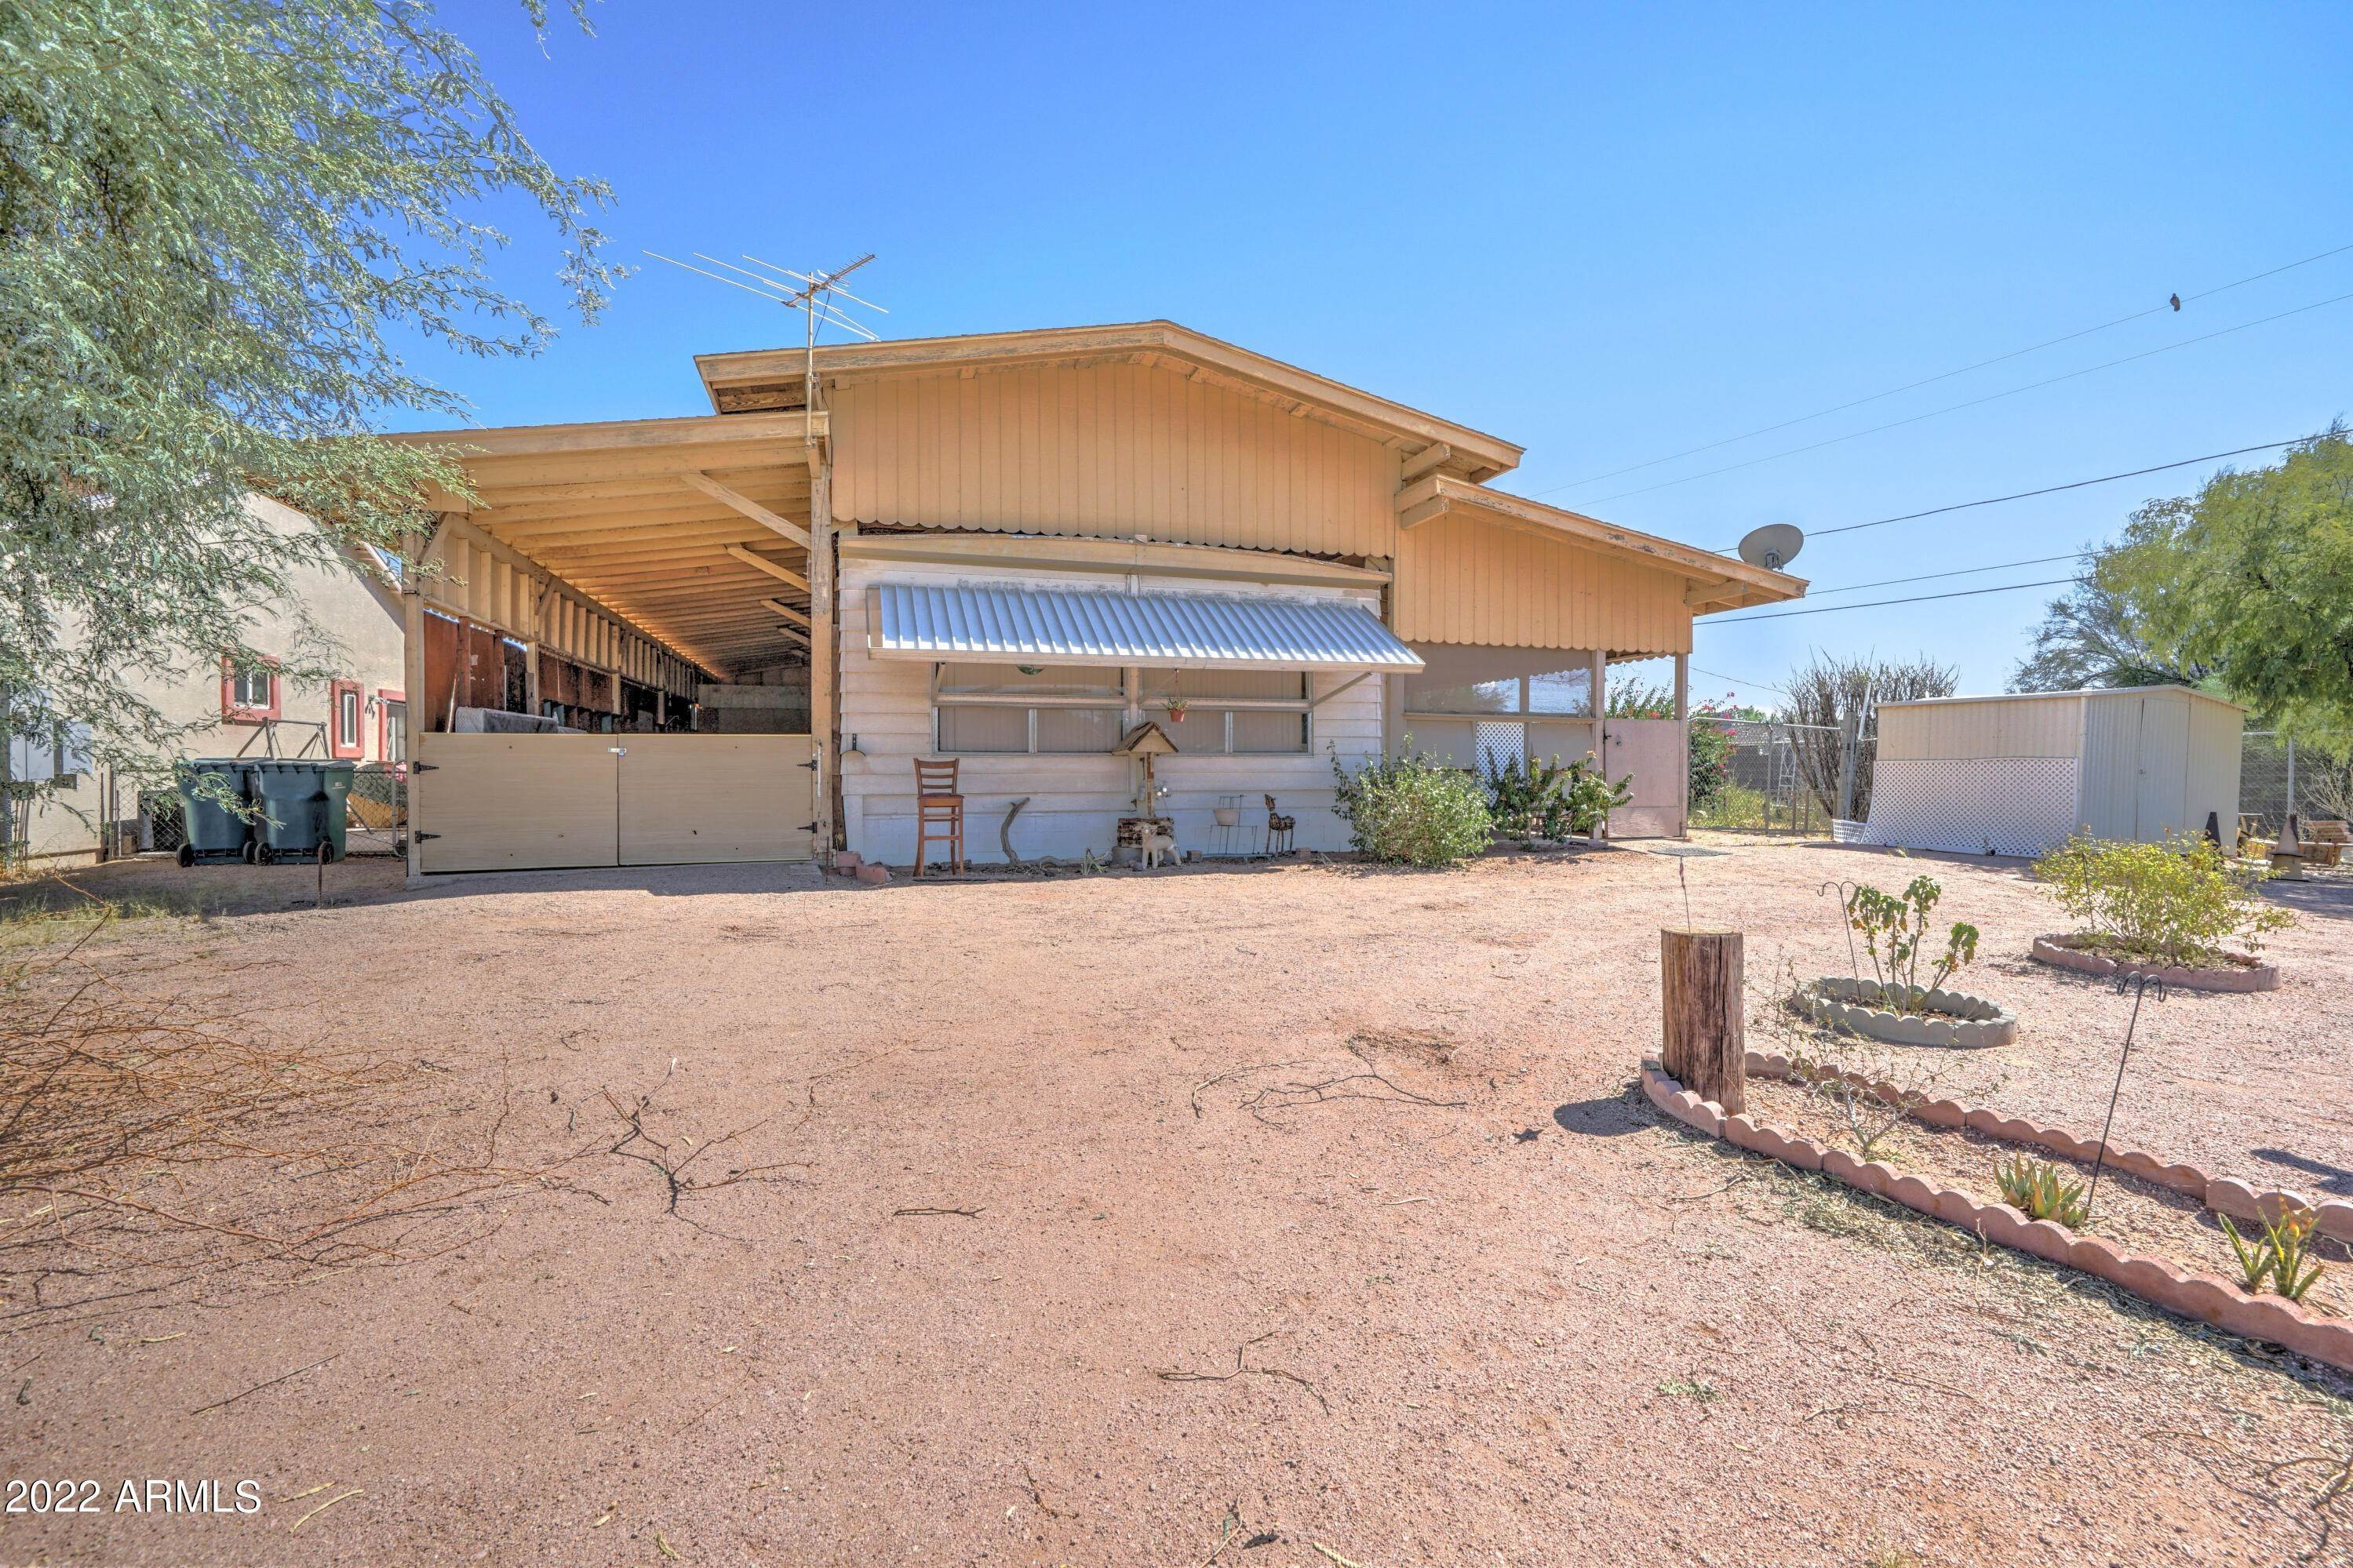 2. Mobile Home for Sale at Mesa, AZ 85208